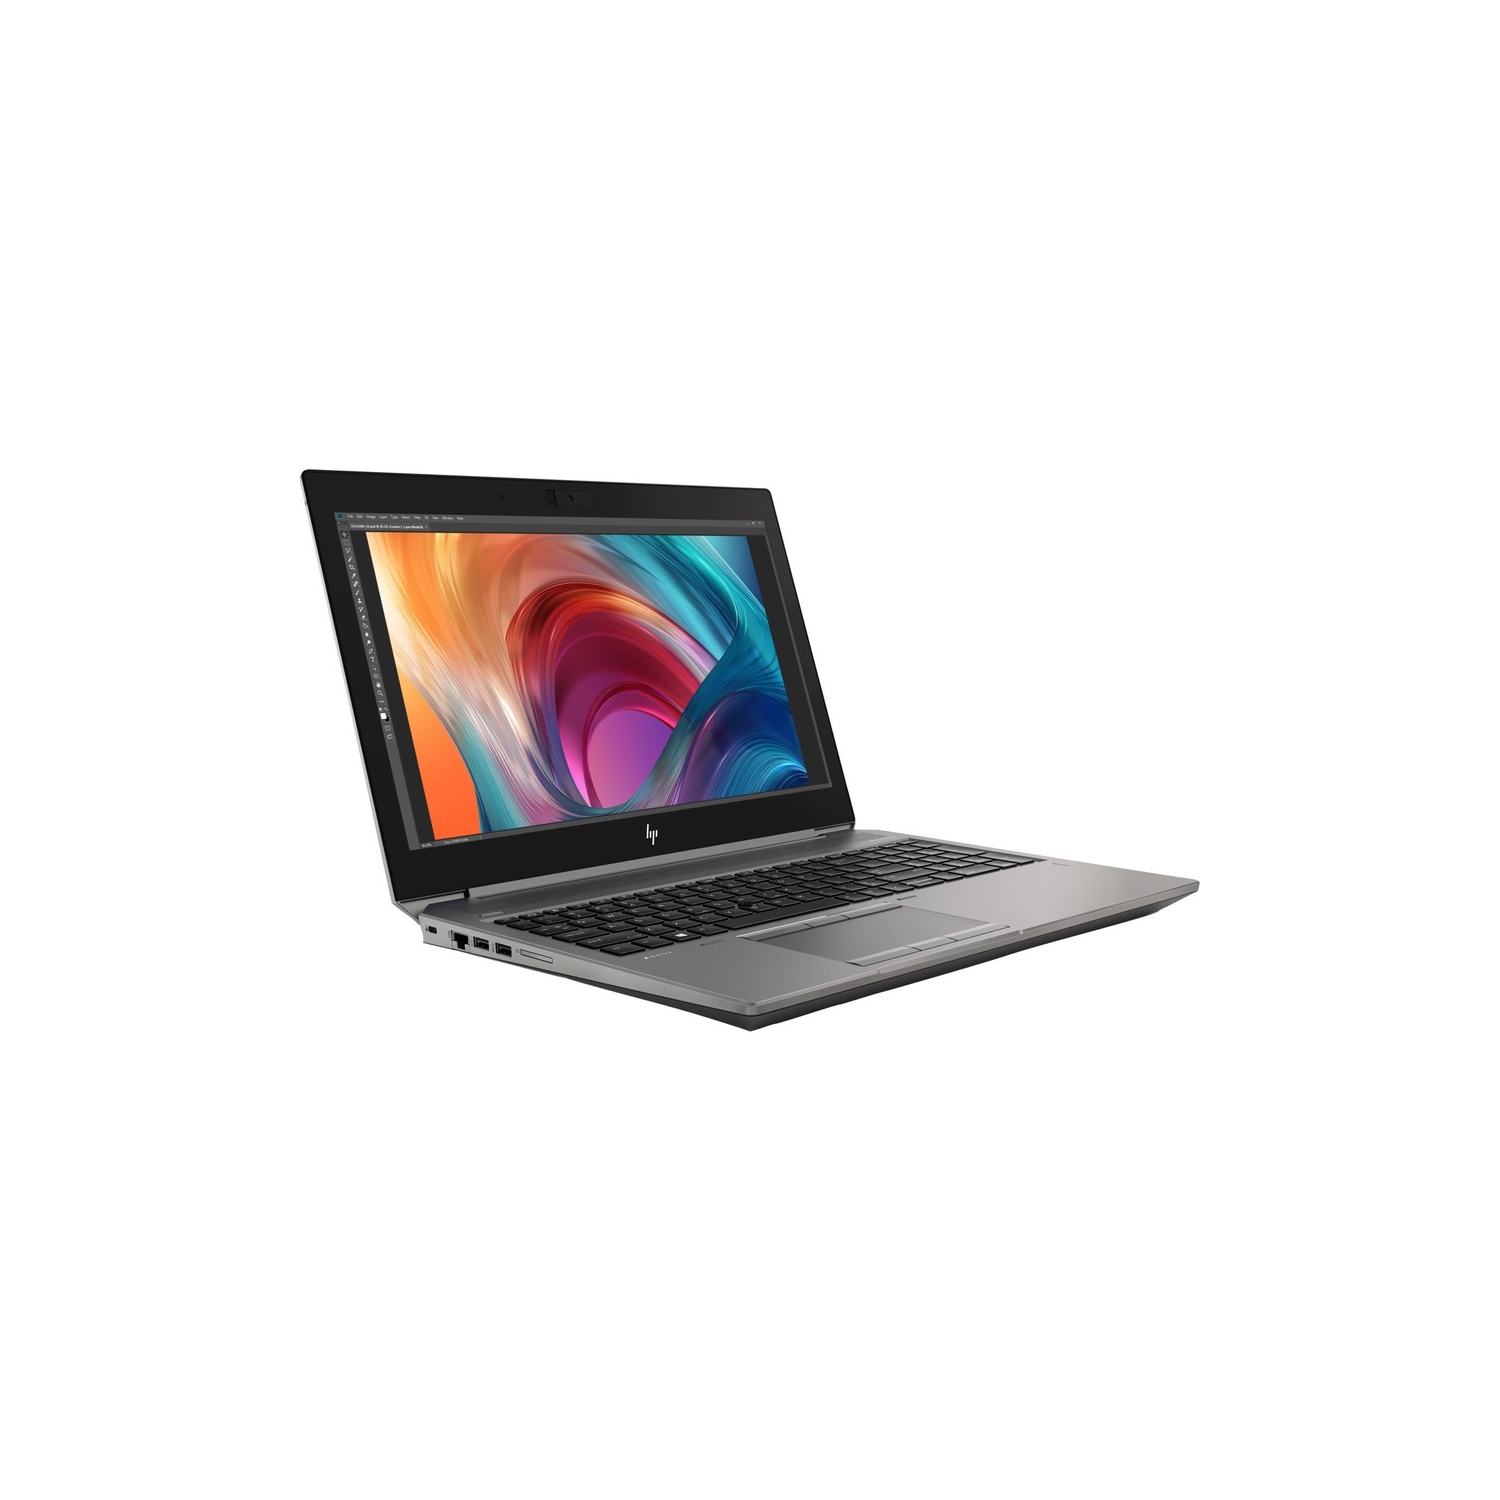 Refurbished (Excellent) - HP ZBook 15 G6 15.6" Mobile Workstation Intel i7-9750H 32 GB DDR4 512 GB NVMe Quadro T1000 Windows 10 Pro 64-Bit